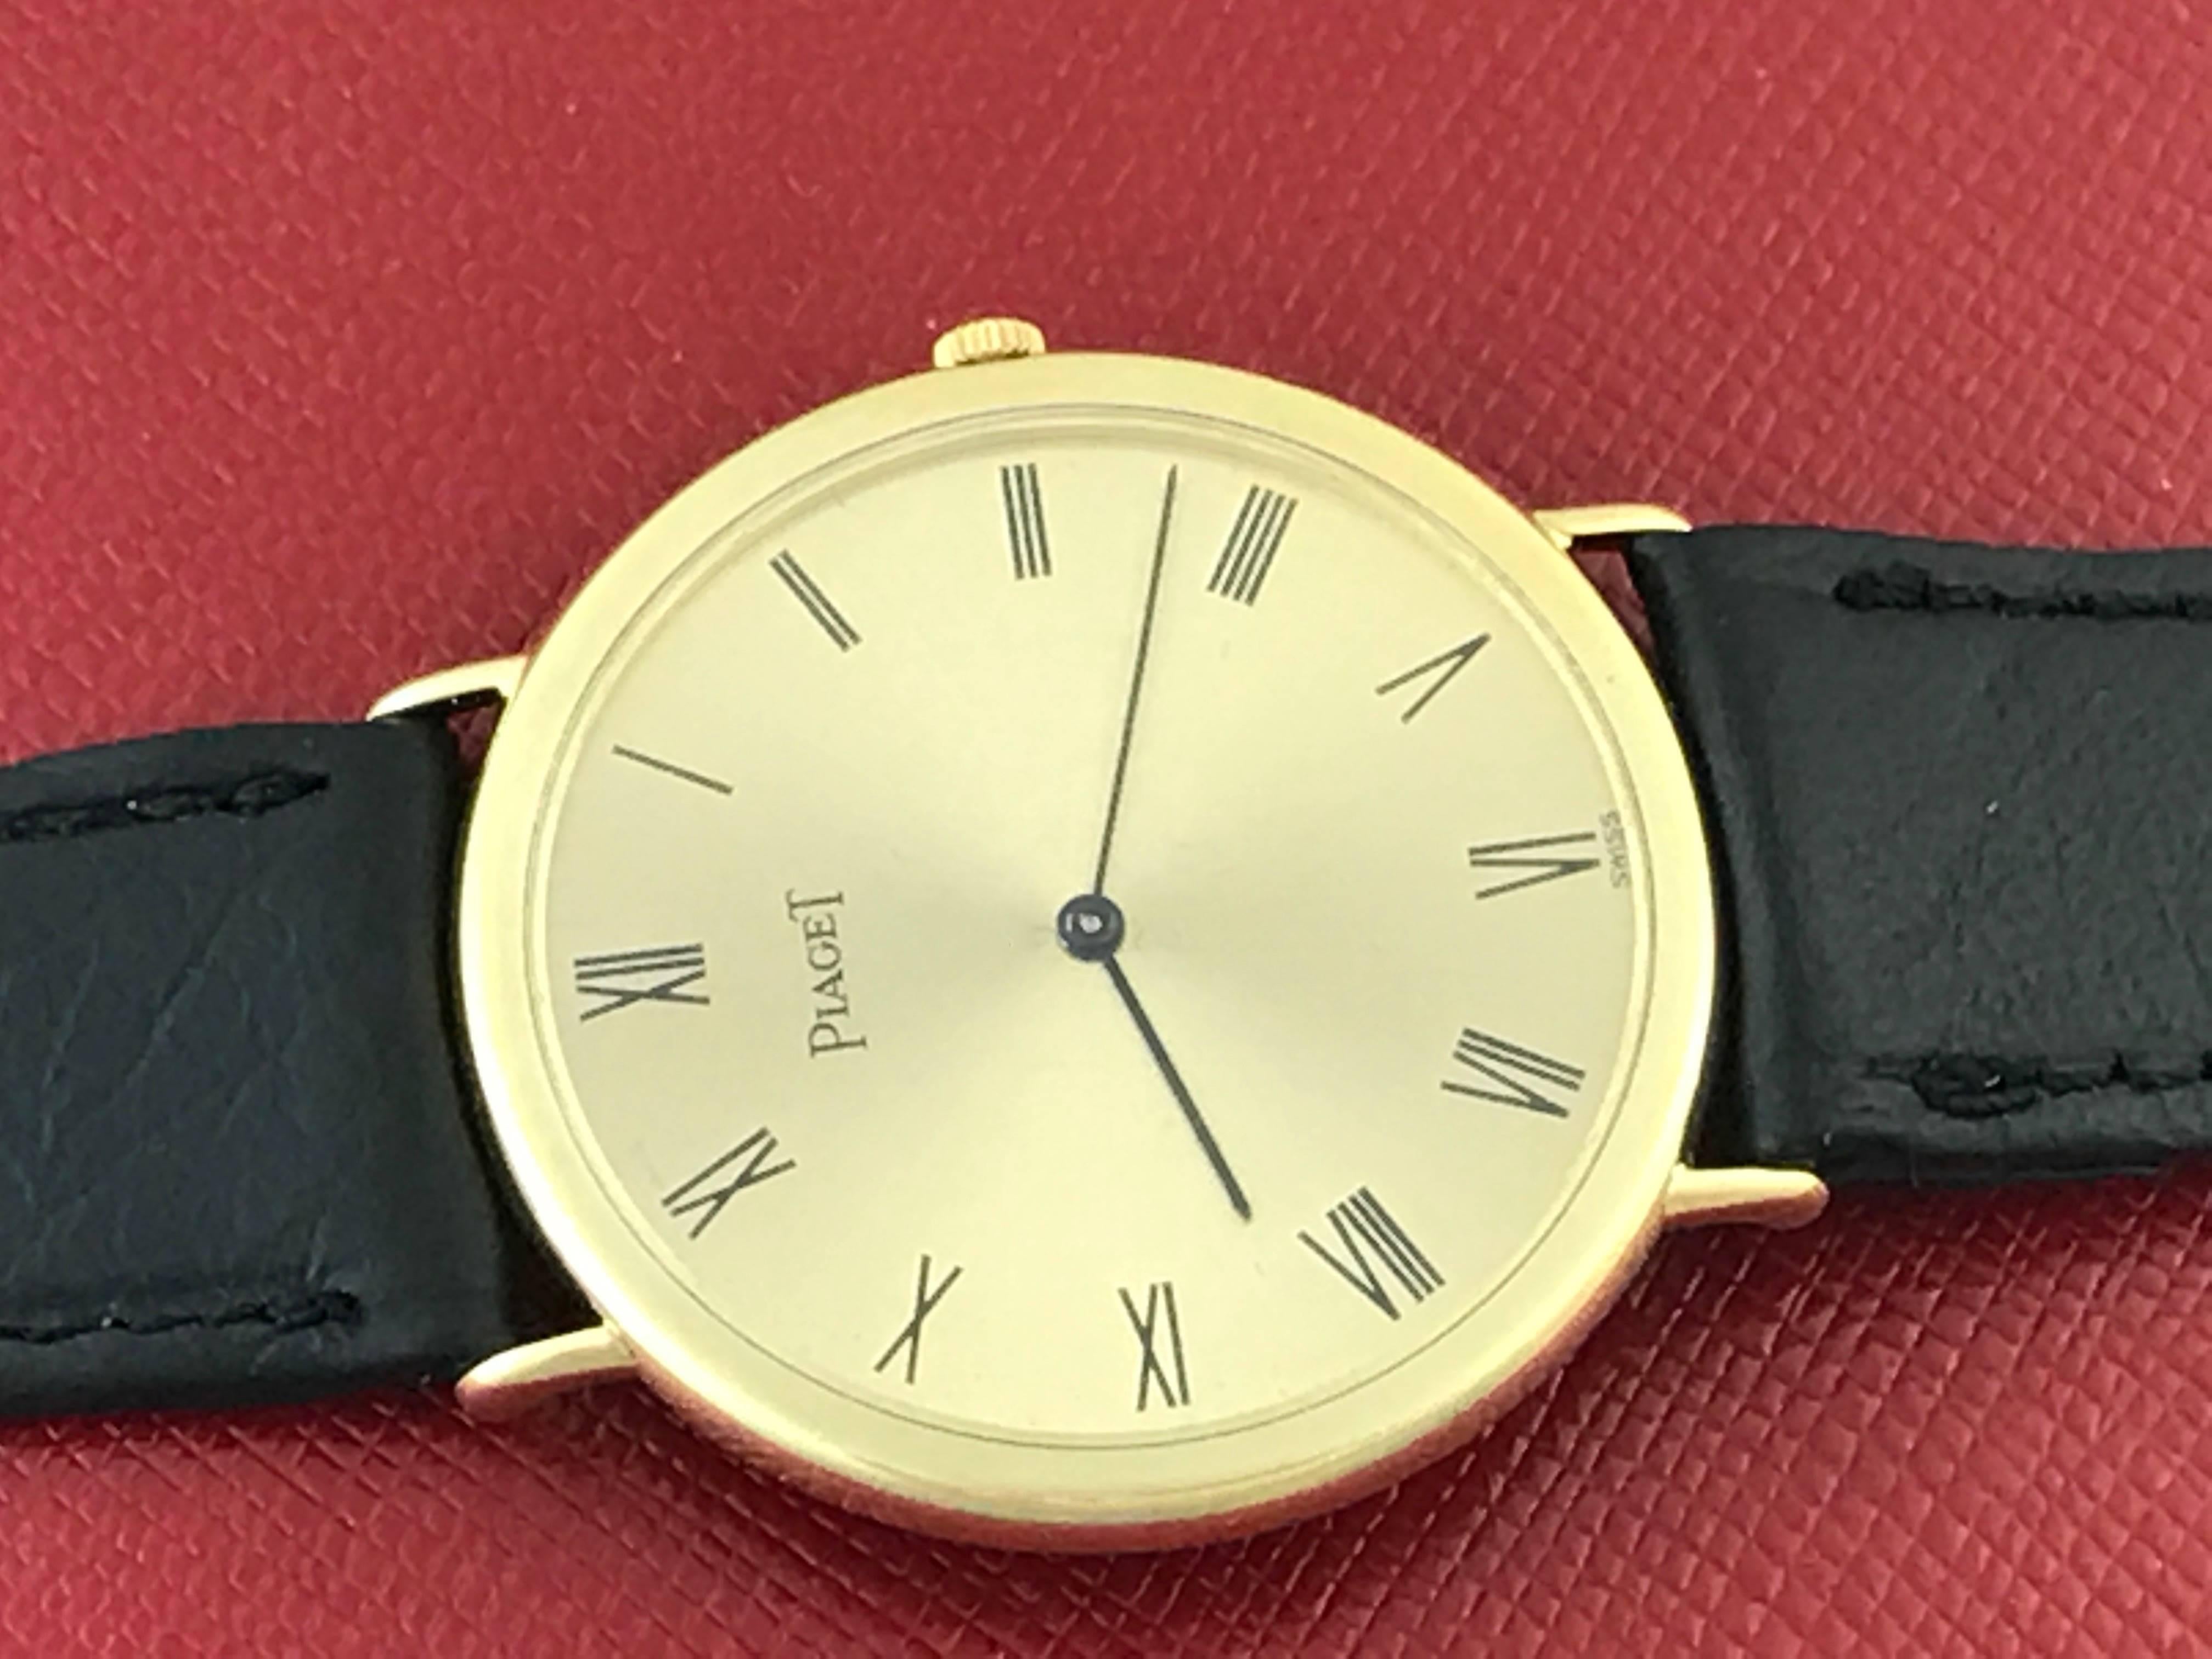 Piaget 18k Yellow Gold Manual Wristwatch with Black Strap 1